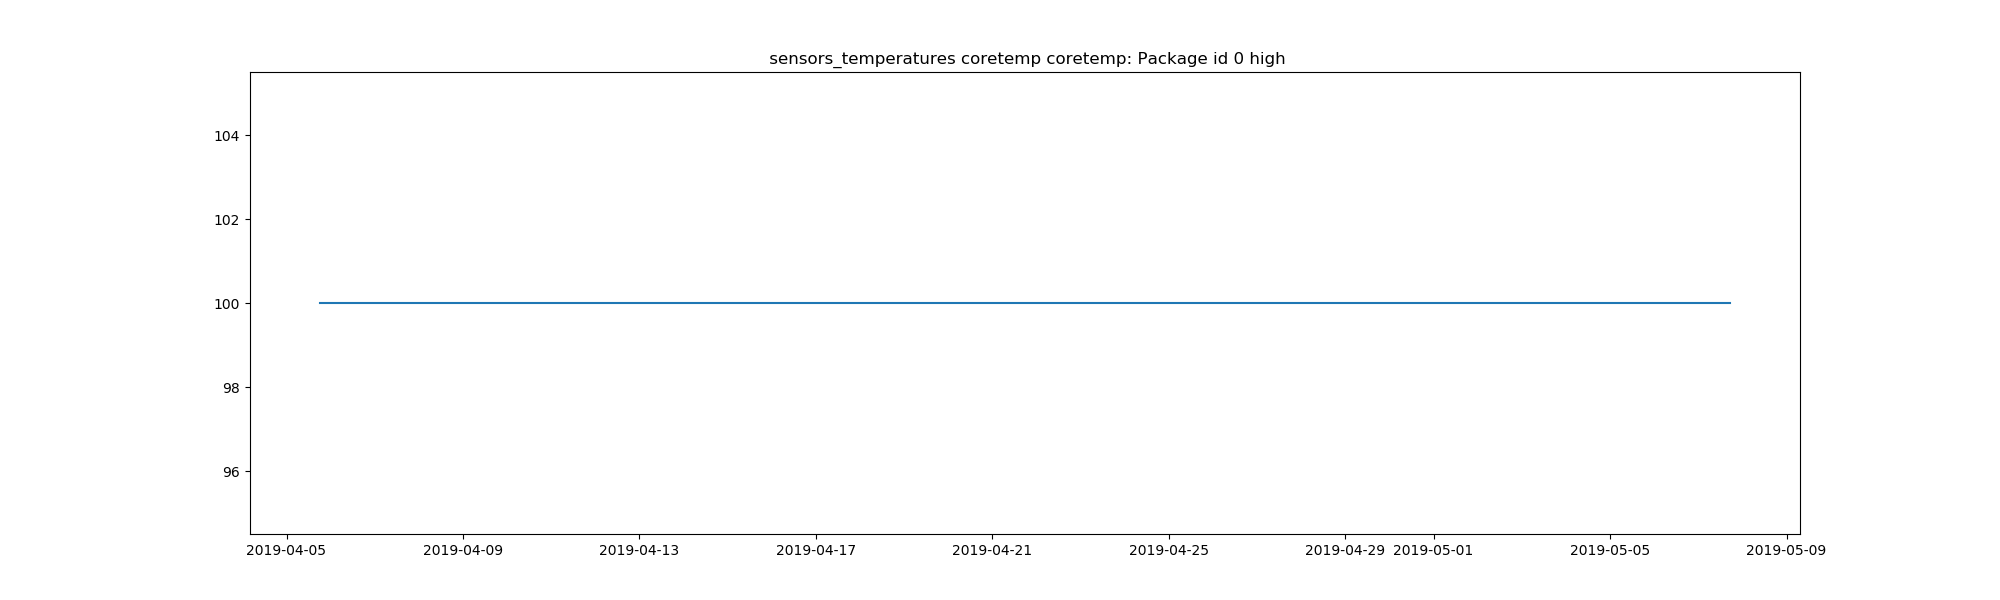 task-sensors-sensors_temperatures-acpitz-pch_skylake-iwlwifi-coretemp-coretemppackageid0-label-current-high.png